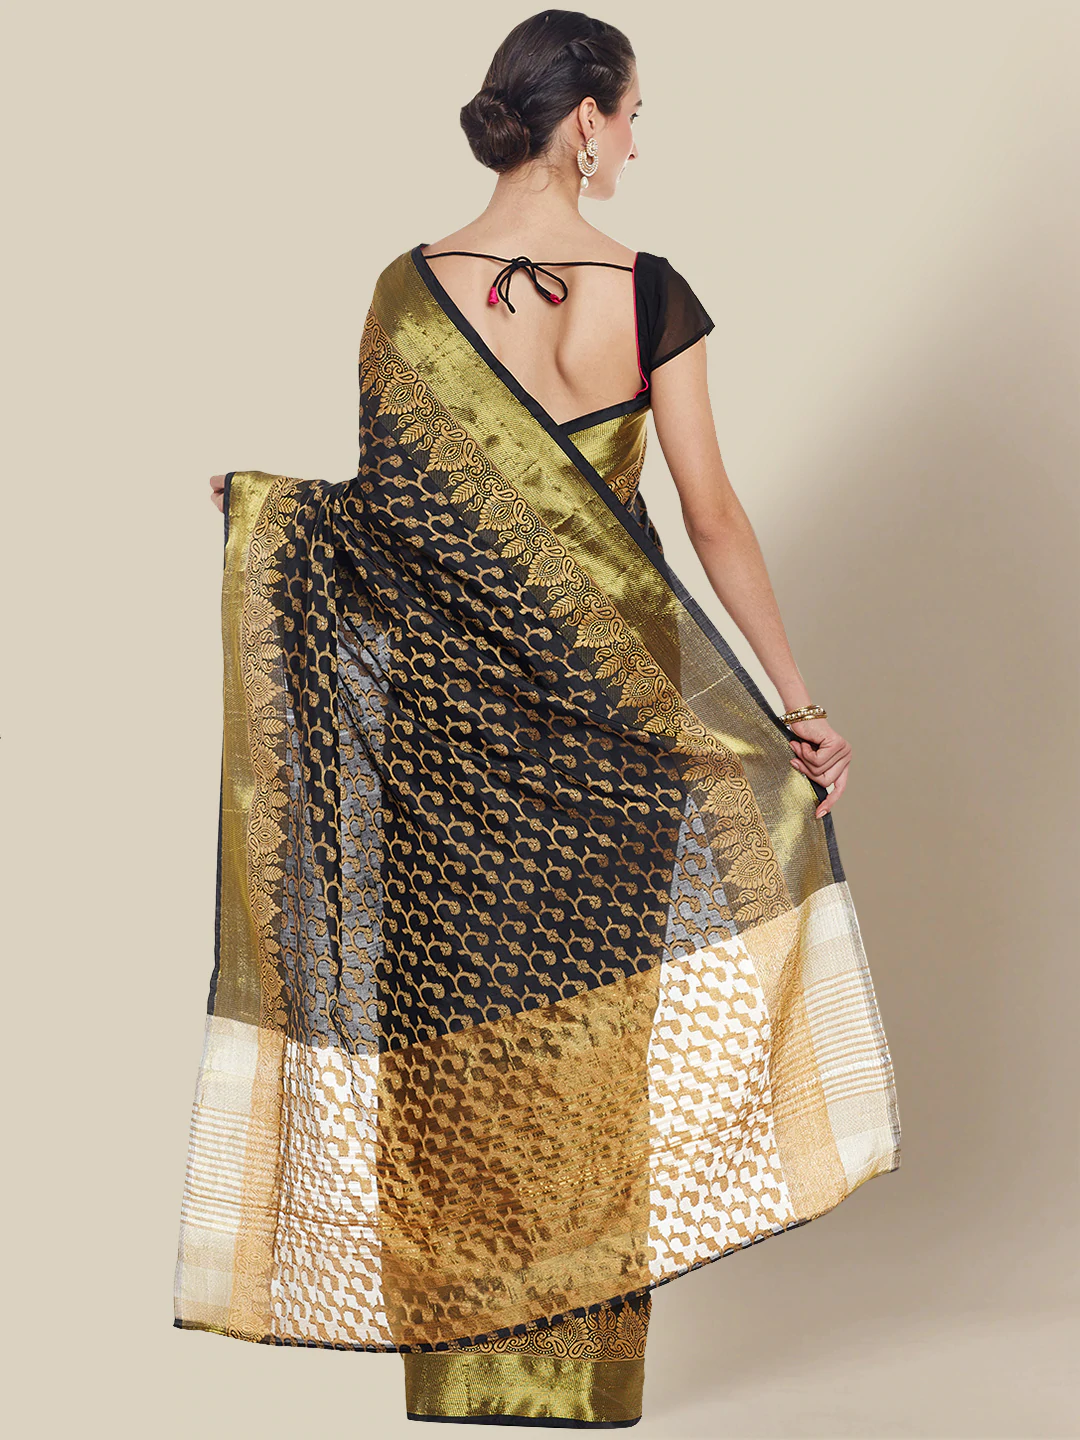 Black & Gold Banarasi Silk Saree With Golden Zari Weaving and Ethnic Woven Border.